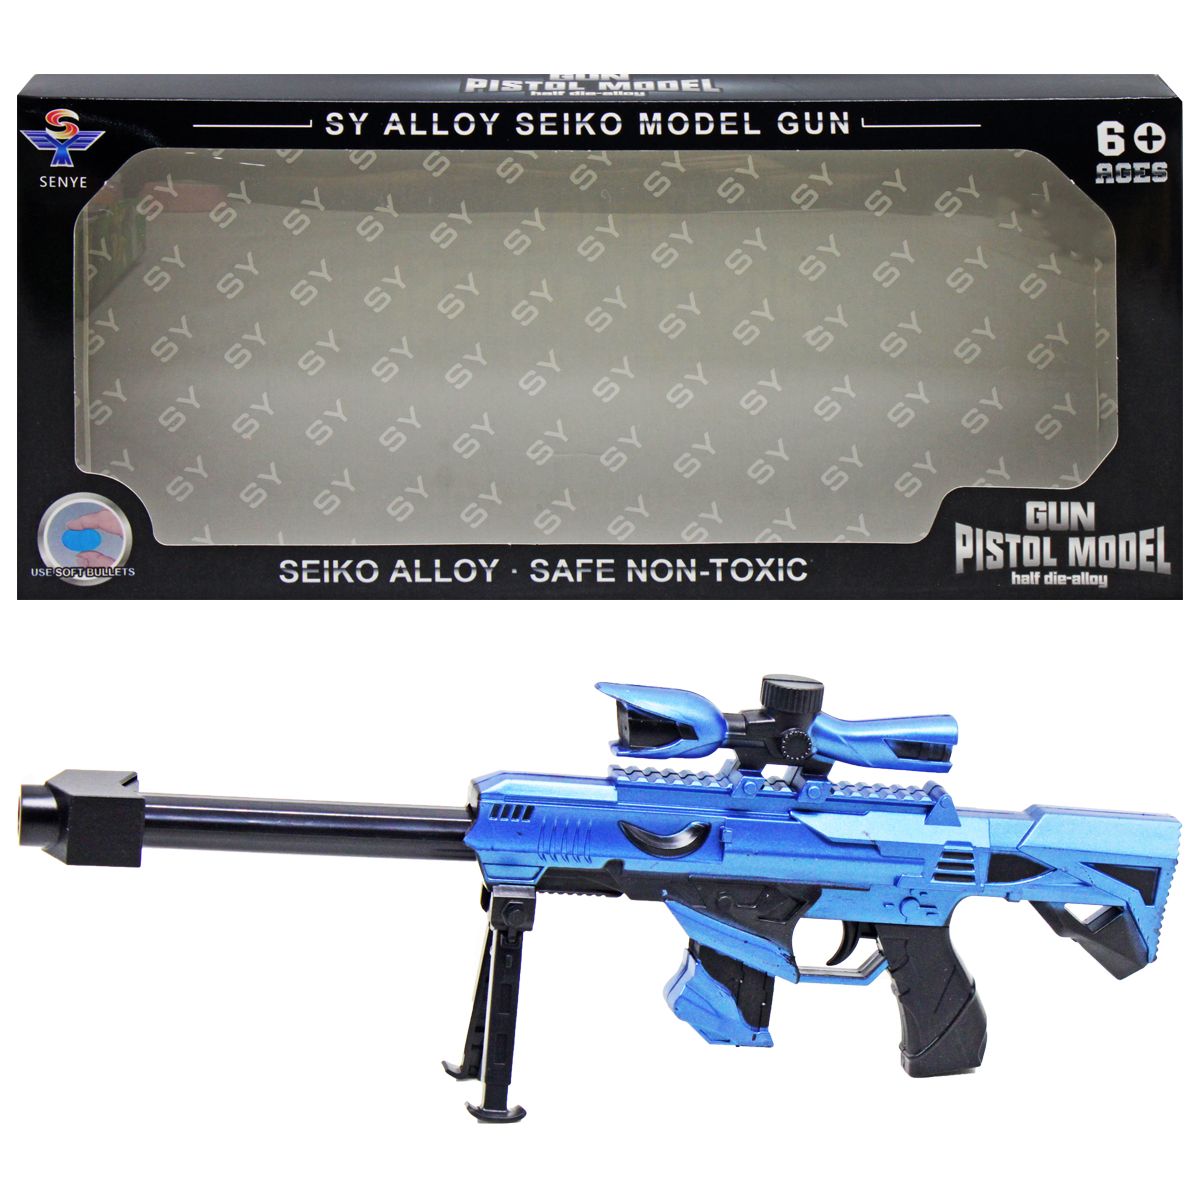 Автомат "Gun pistol model" (голубой)